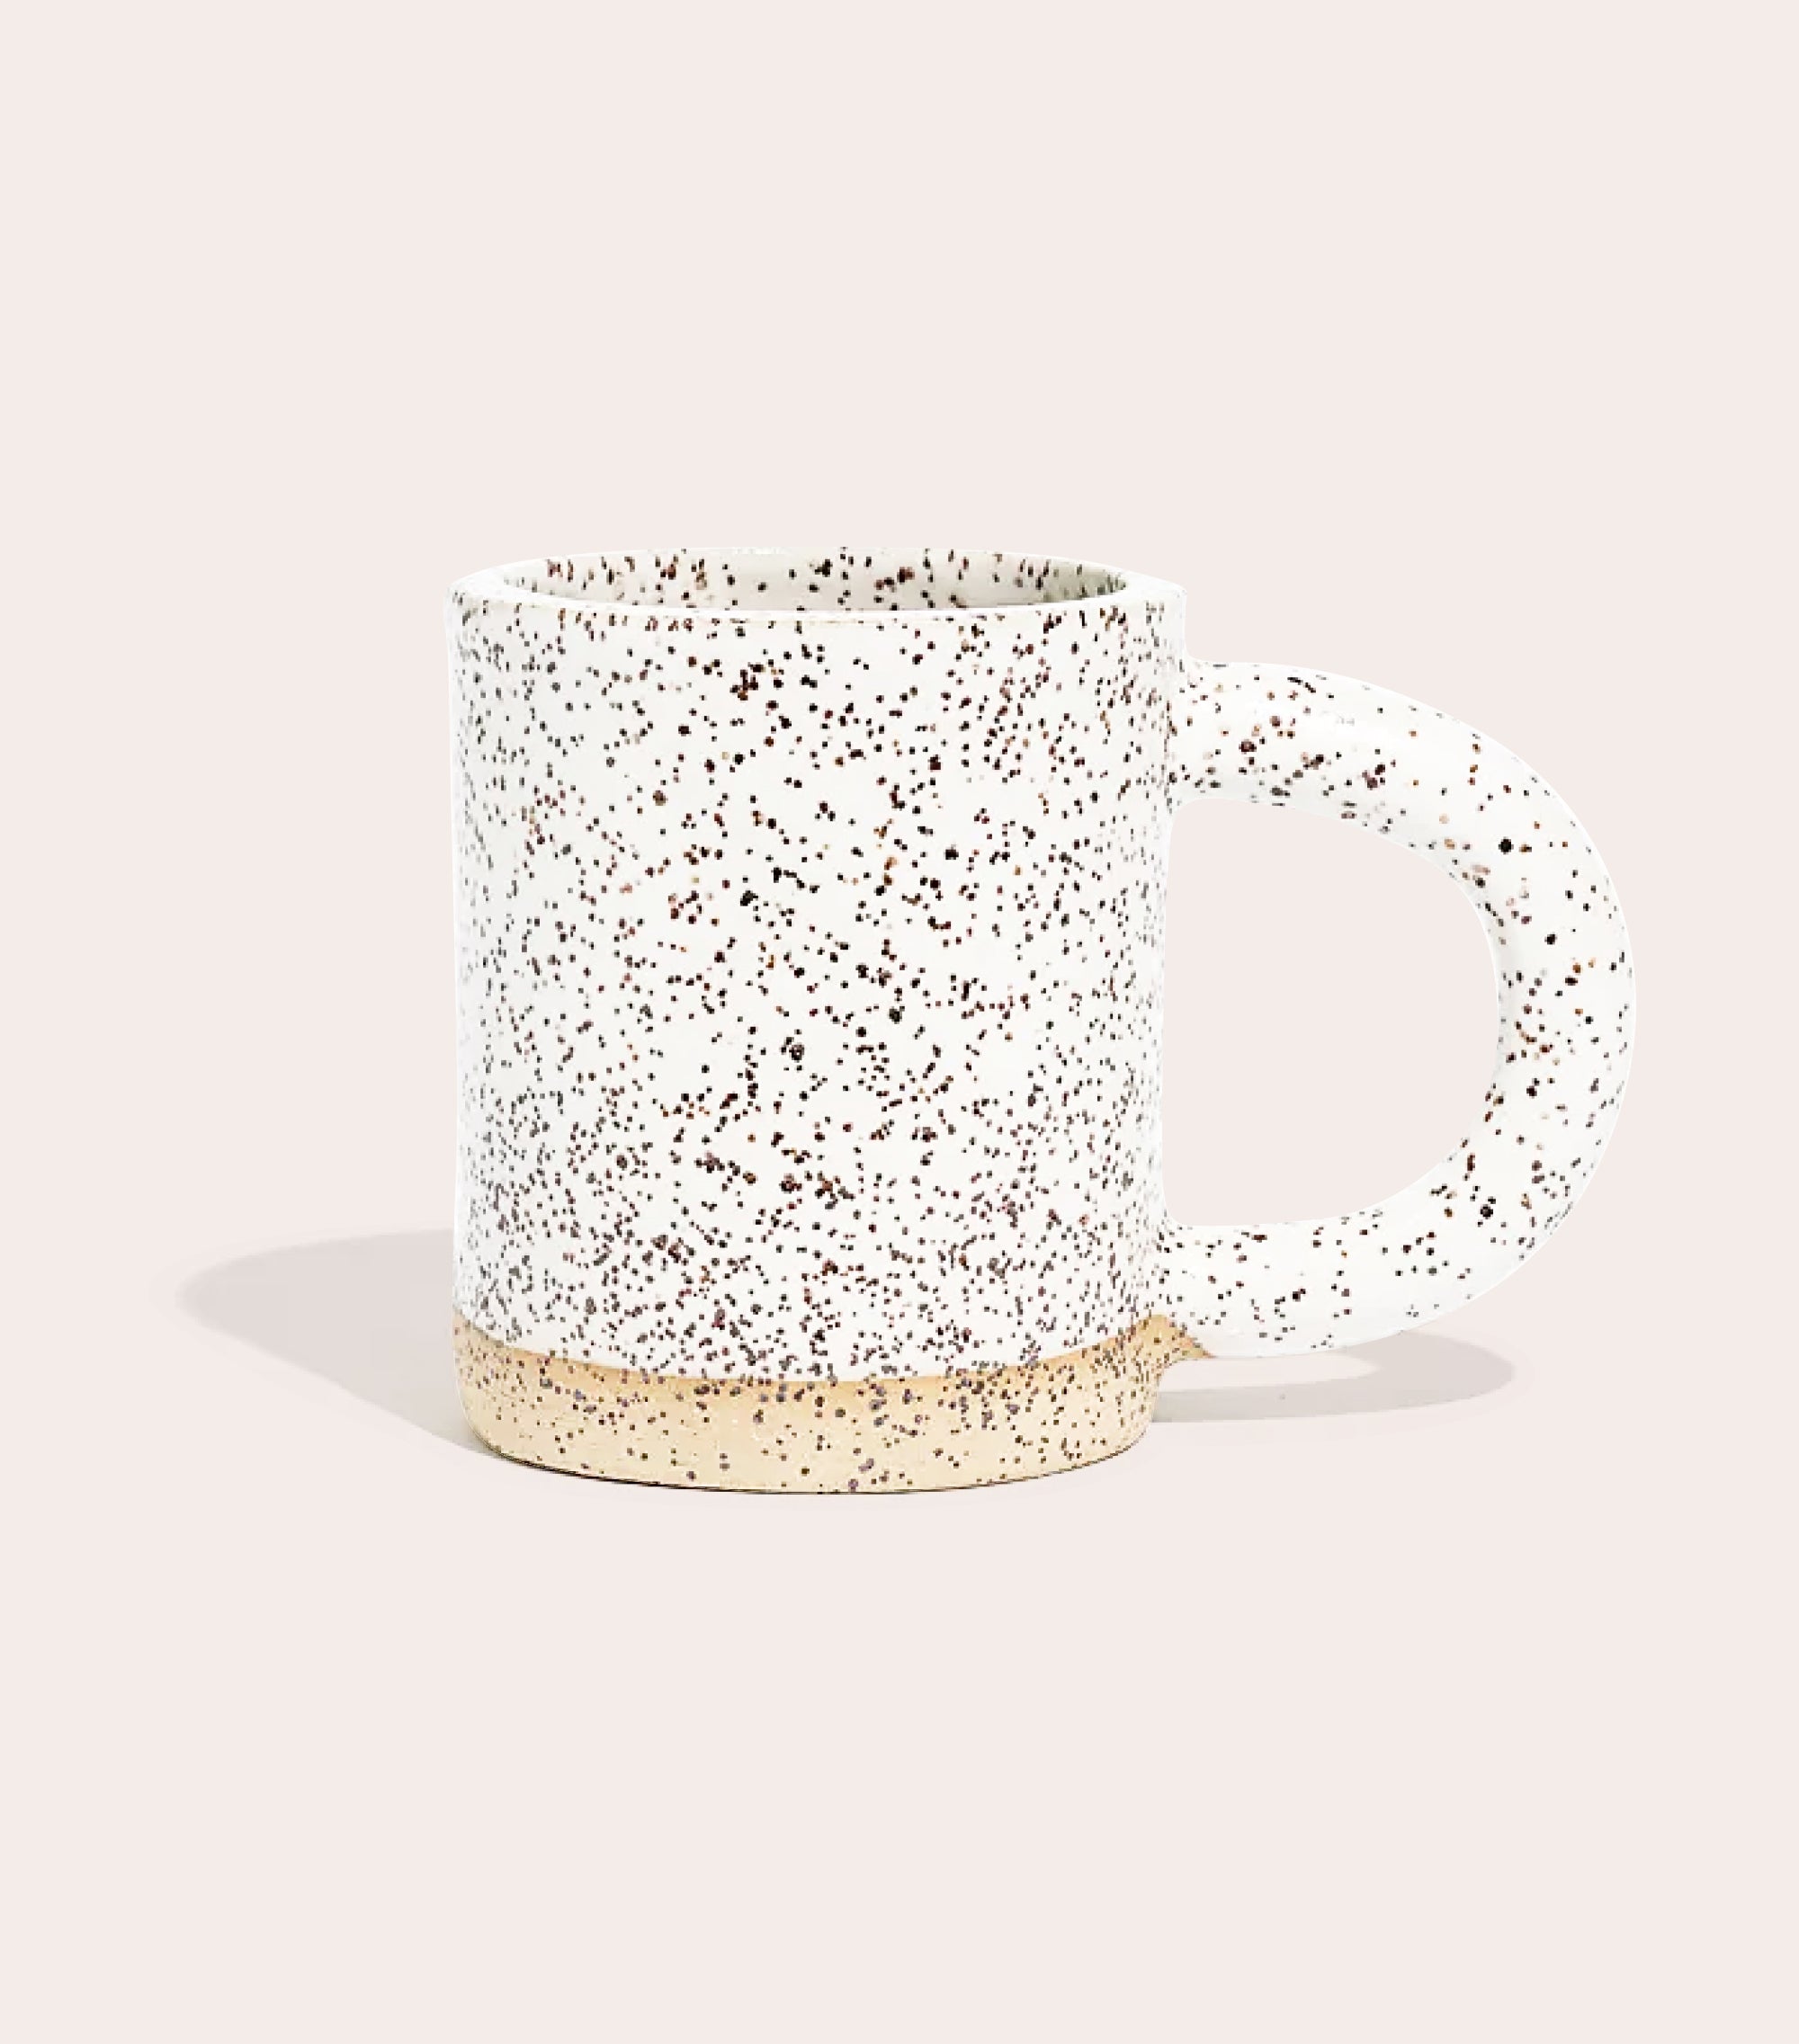 Speckled Pastel Ceramic Mug